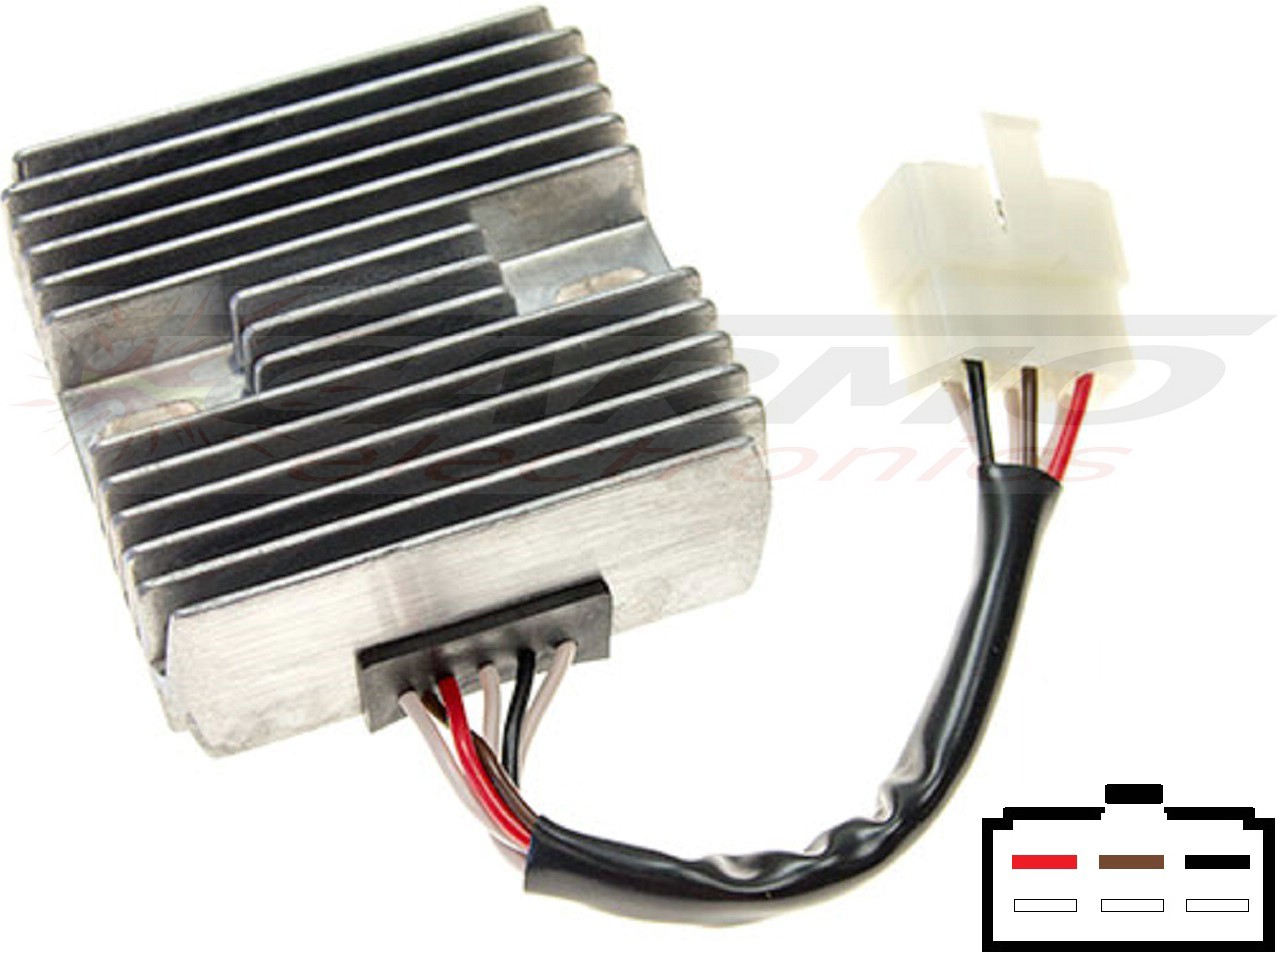 CARR541 Yamaha MOSFET Spanningsregelaar gelijkrichter - Clique na Imagem para Fechar